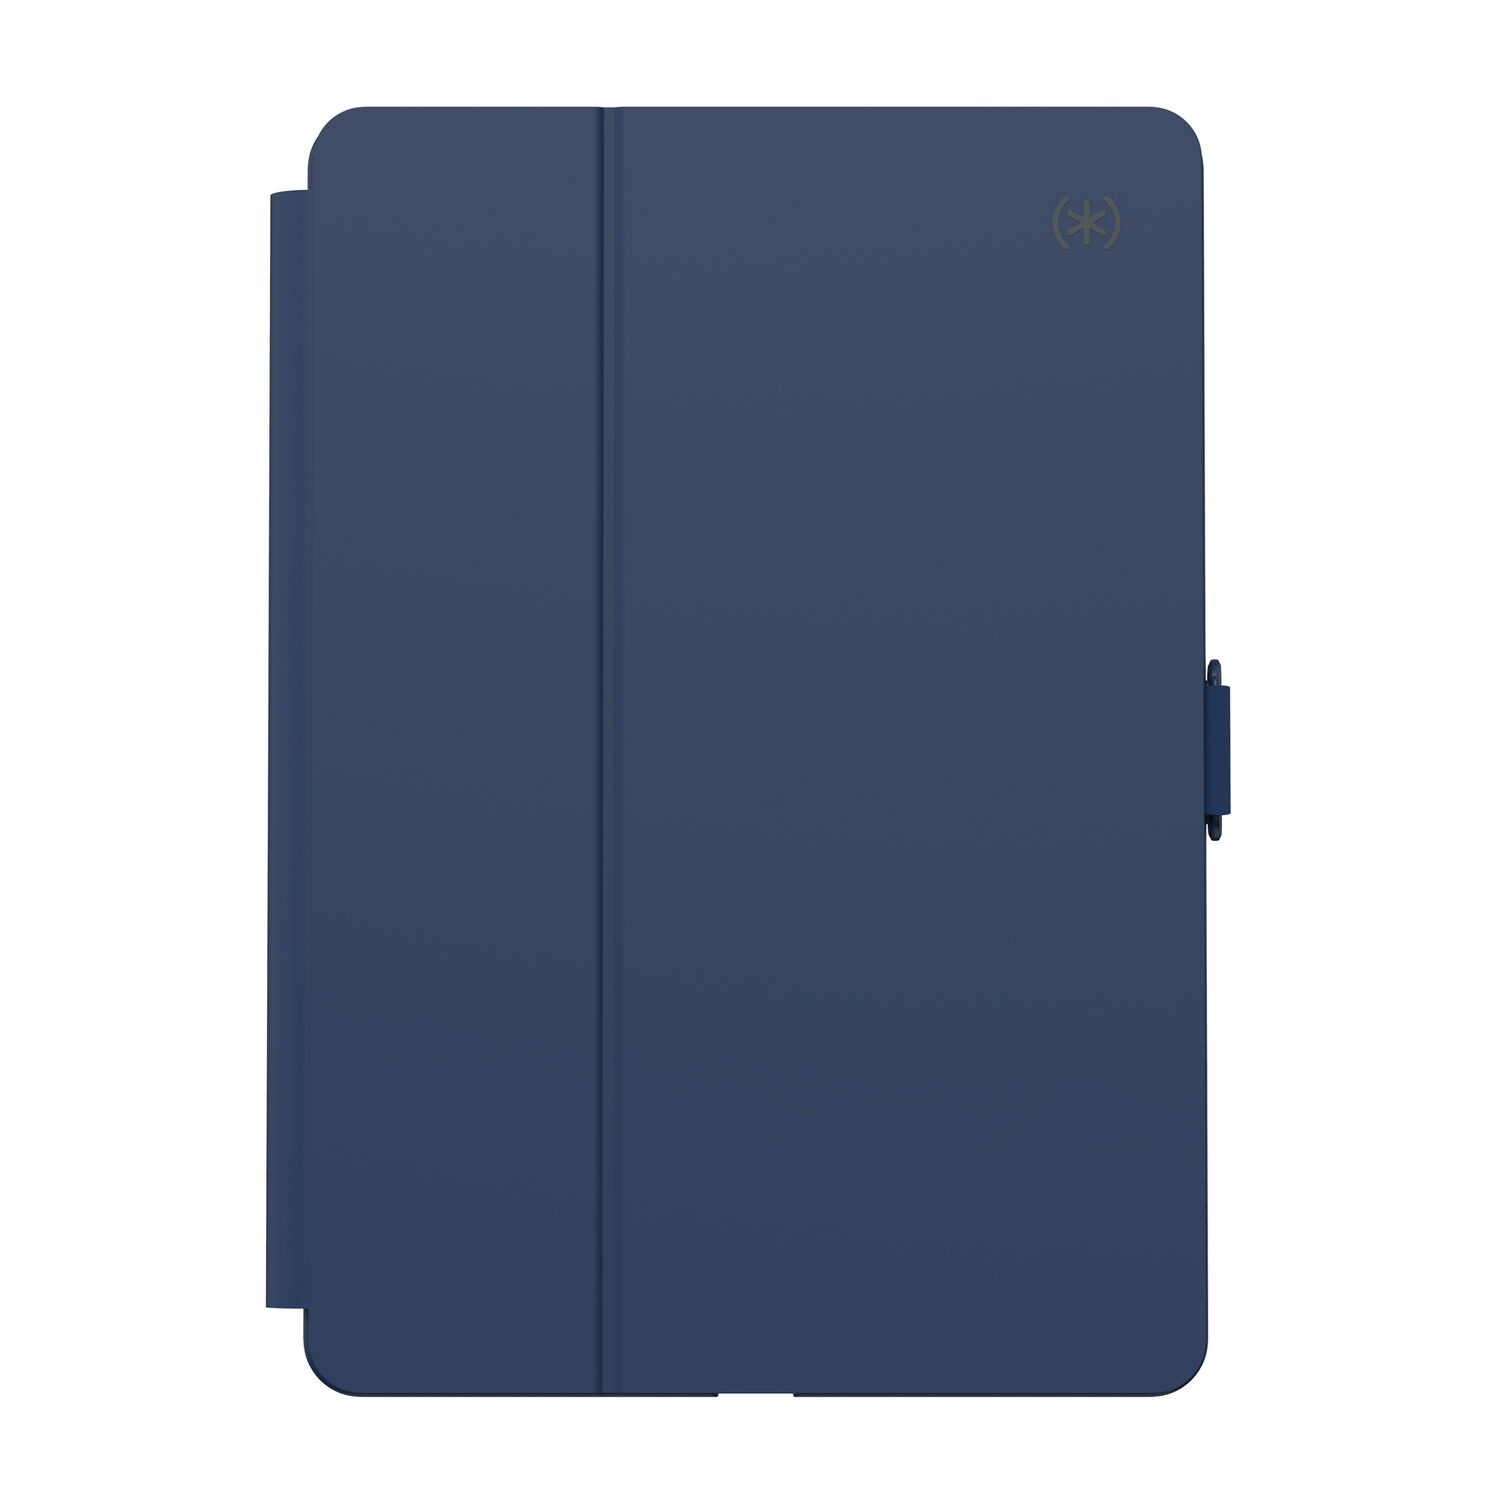 Speck Balance Folio Coastal Blue/Charcoal Grey for iPad 10.2-Inch